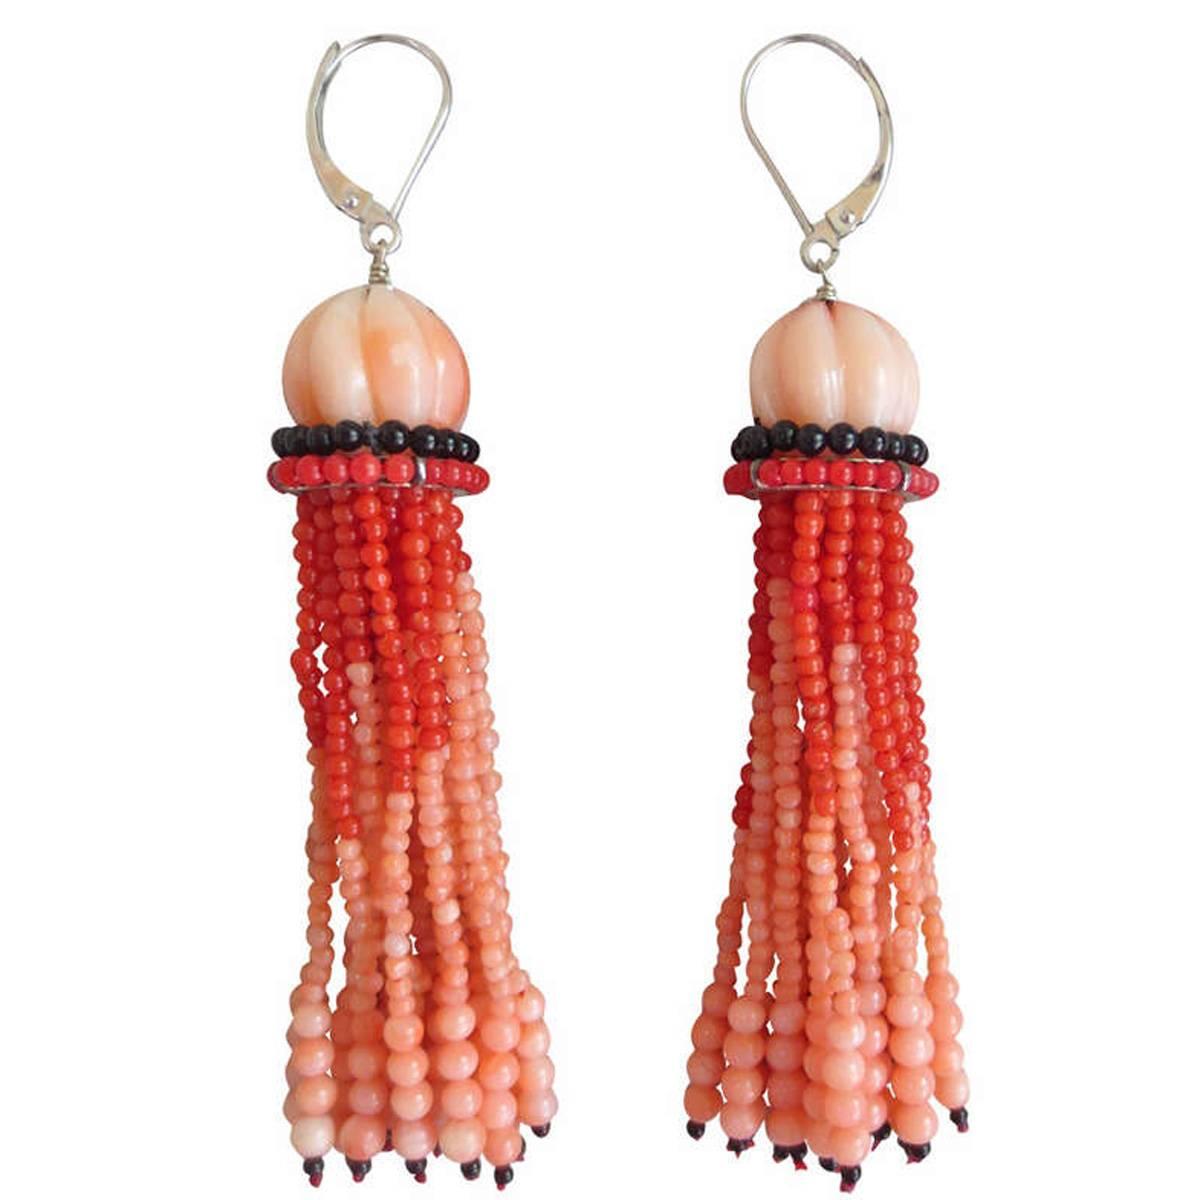 Coral and Onyx Tassel Earrings